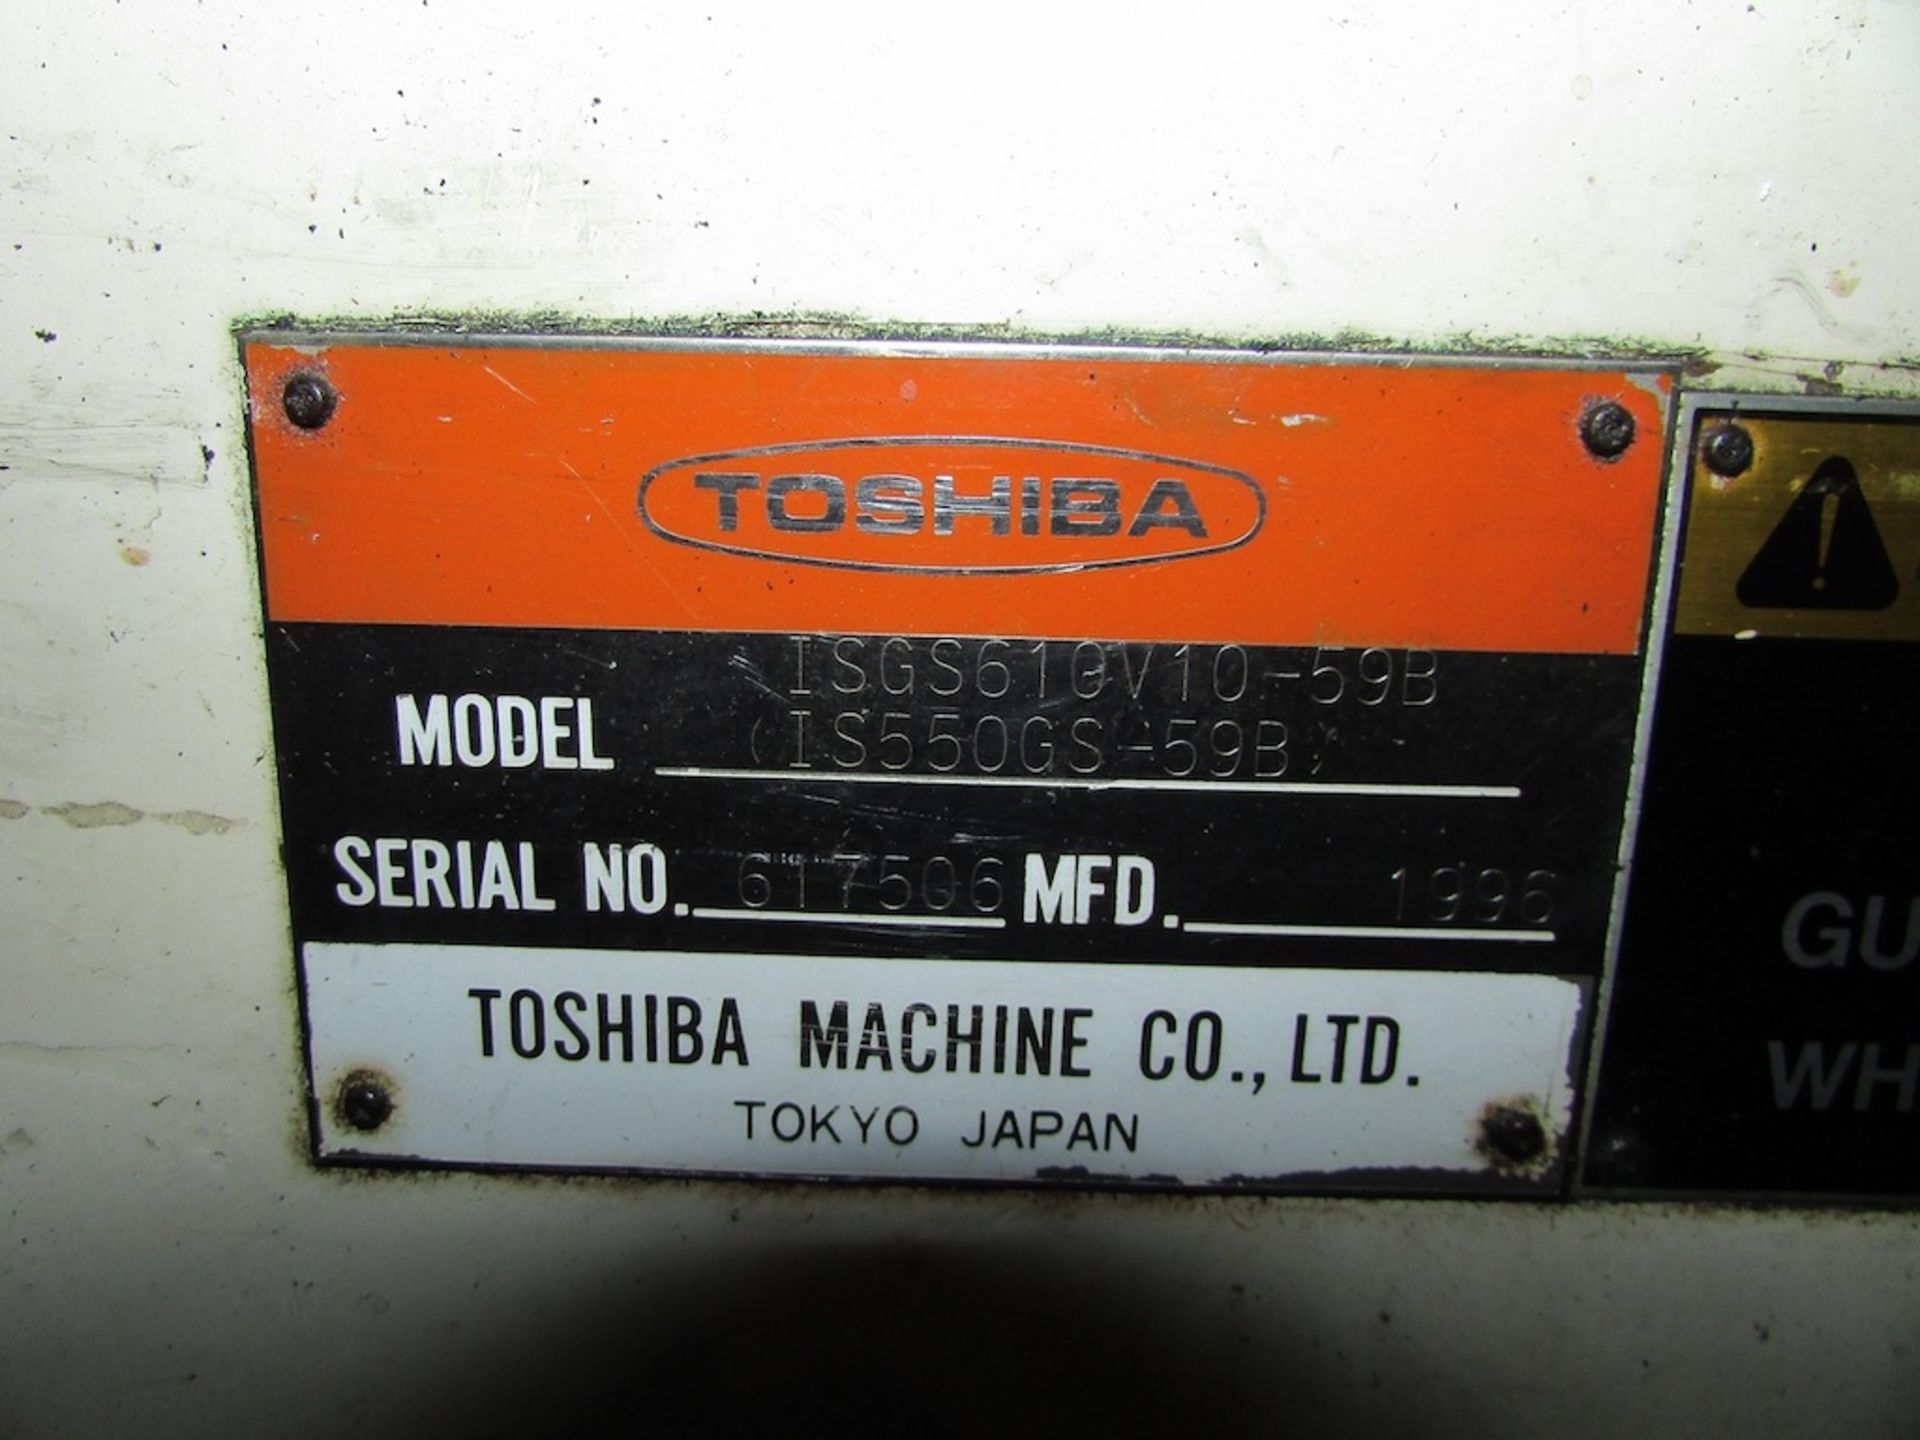 (1) 1996 Toshiba ISGS610V10-59B 610 Ton Injection Molding Machine - Bild 11 aus 11